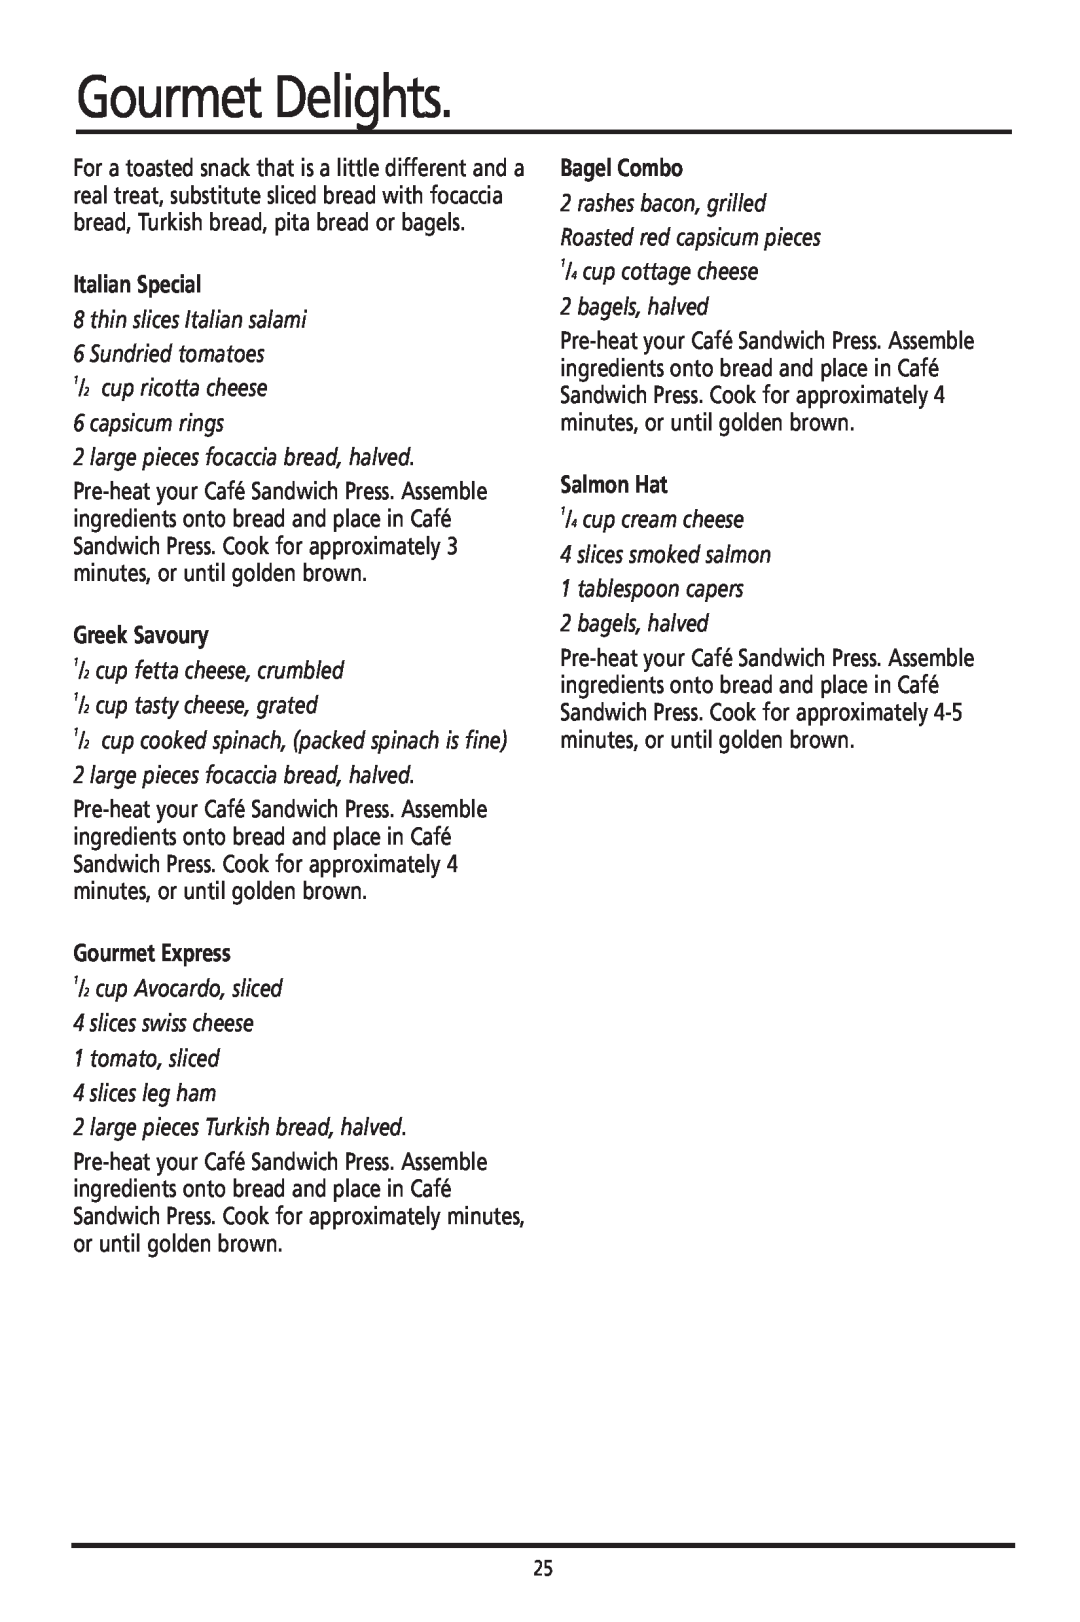 Sunbeam GC7800 manual Gourmet Delights, Italian Special, Greek Savoury, Gourmet Express, Bagel Combo, Salmon Hat 